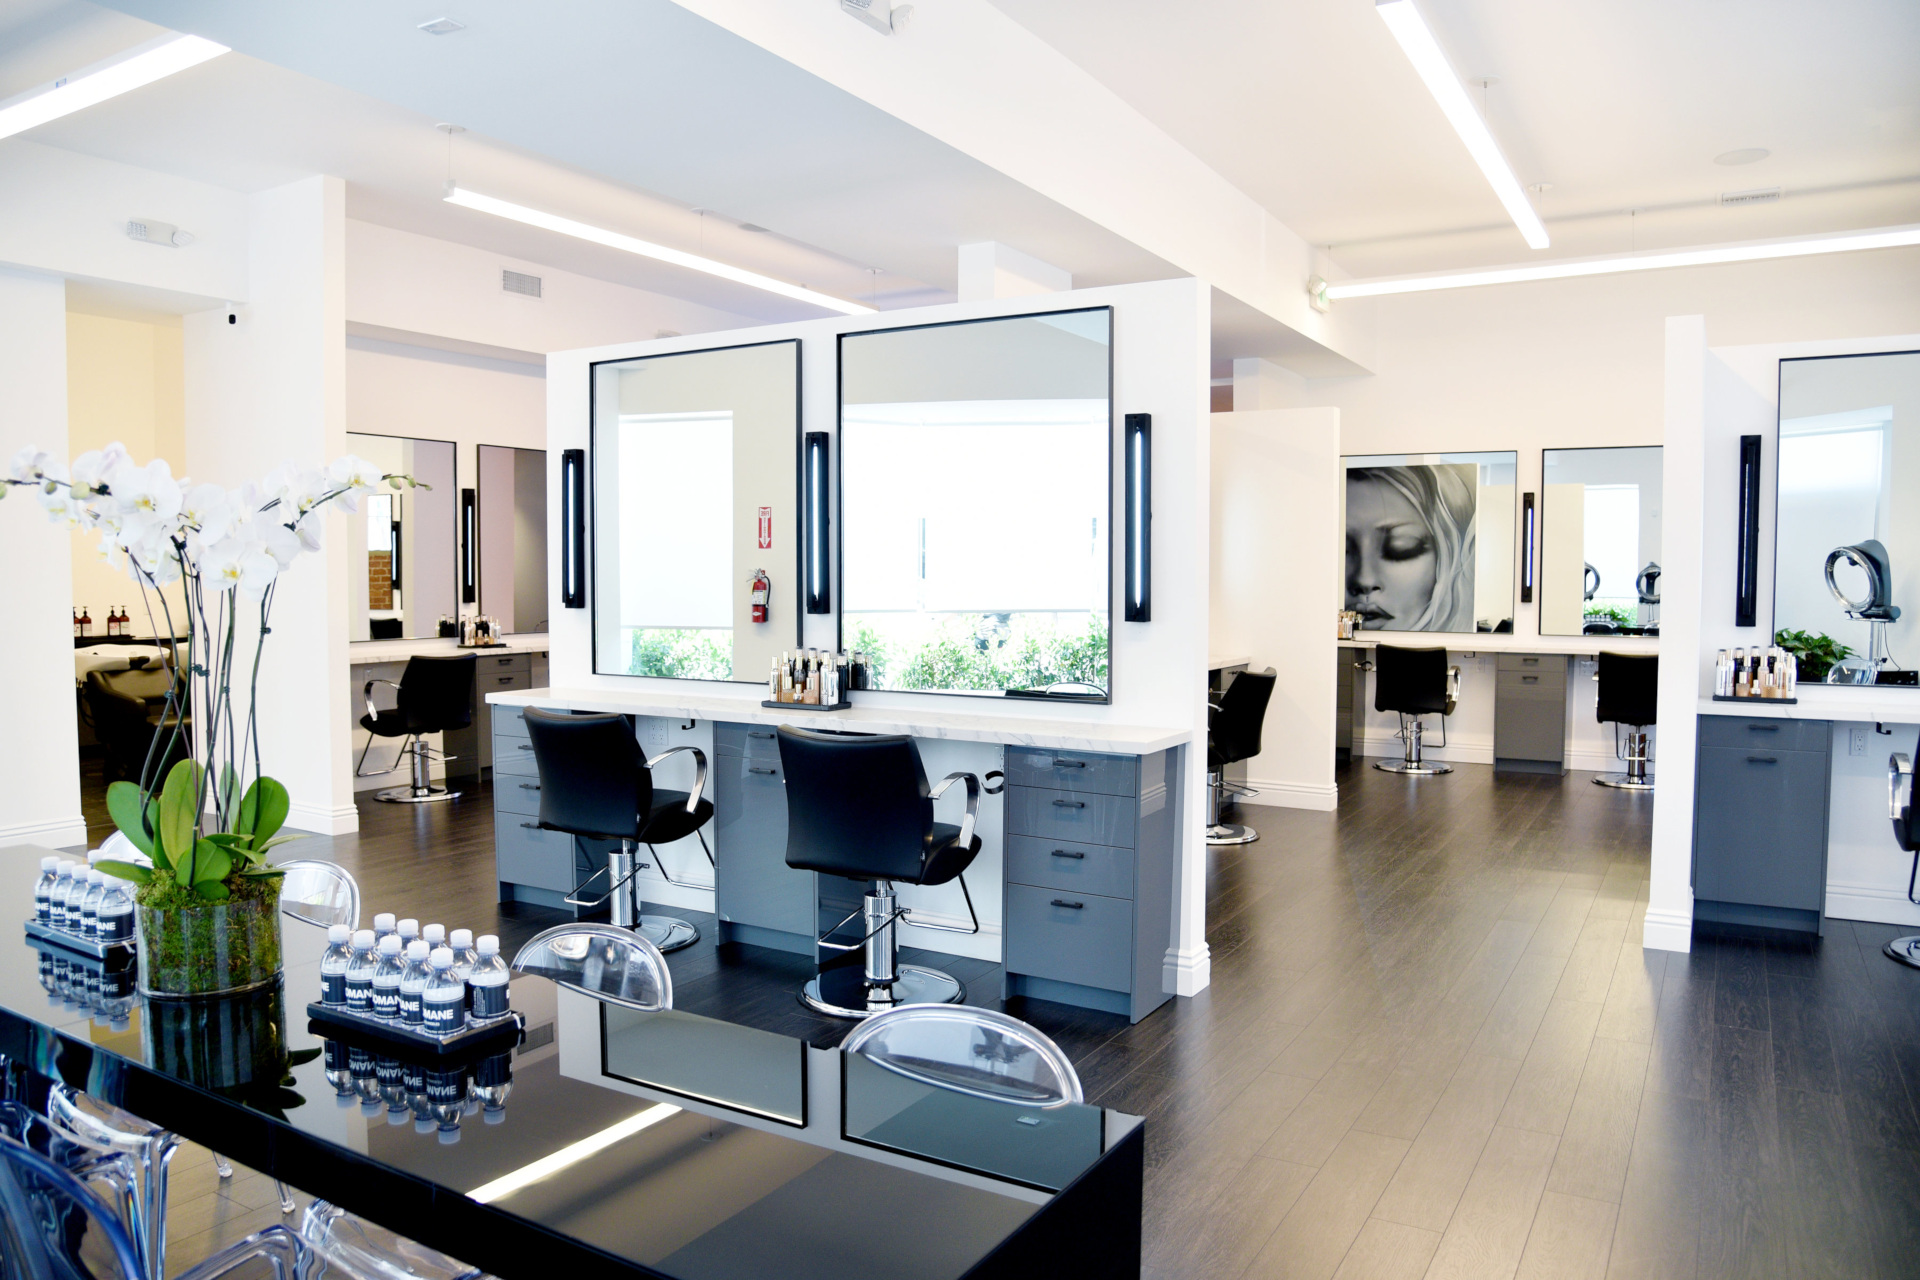 Hair salon interior